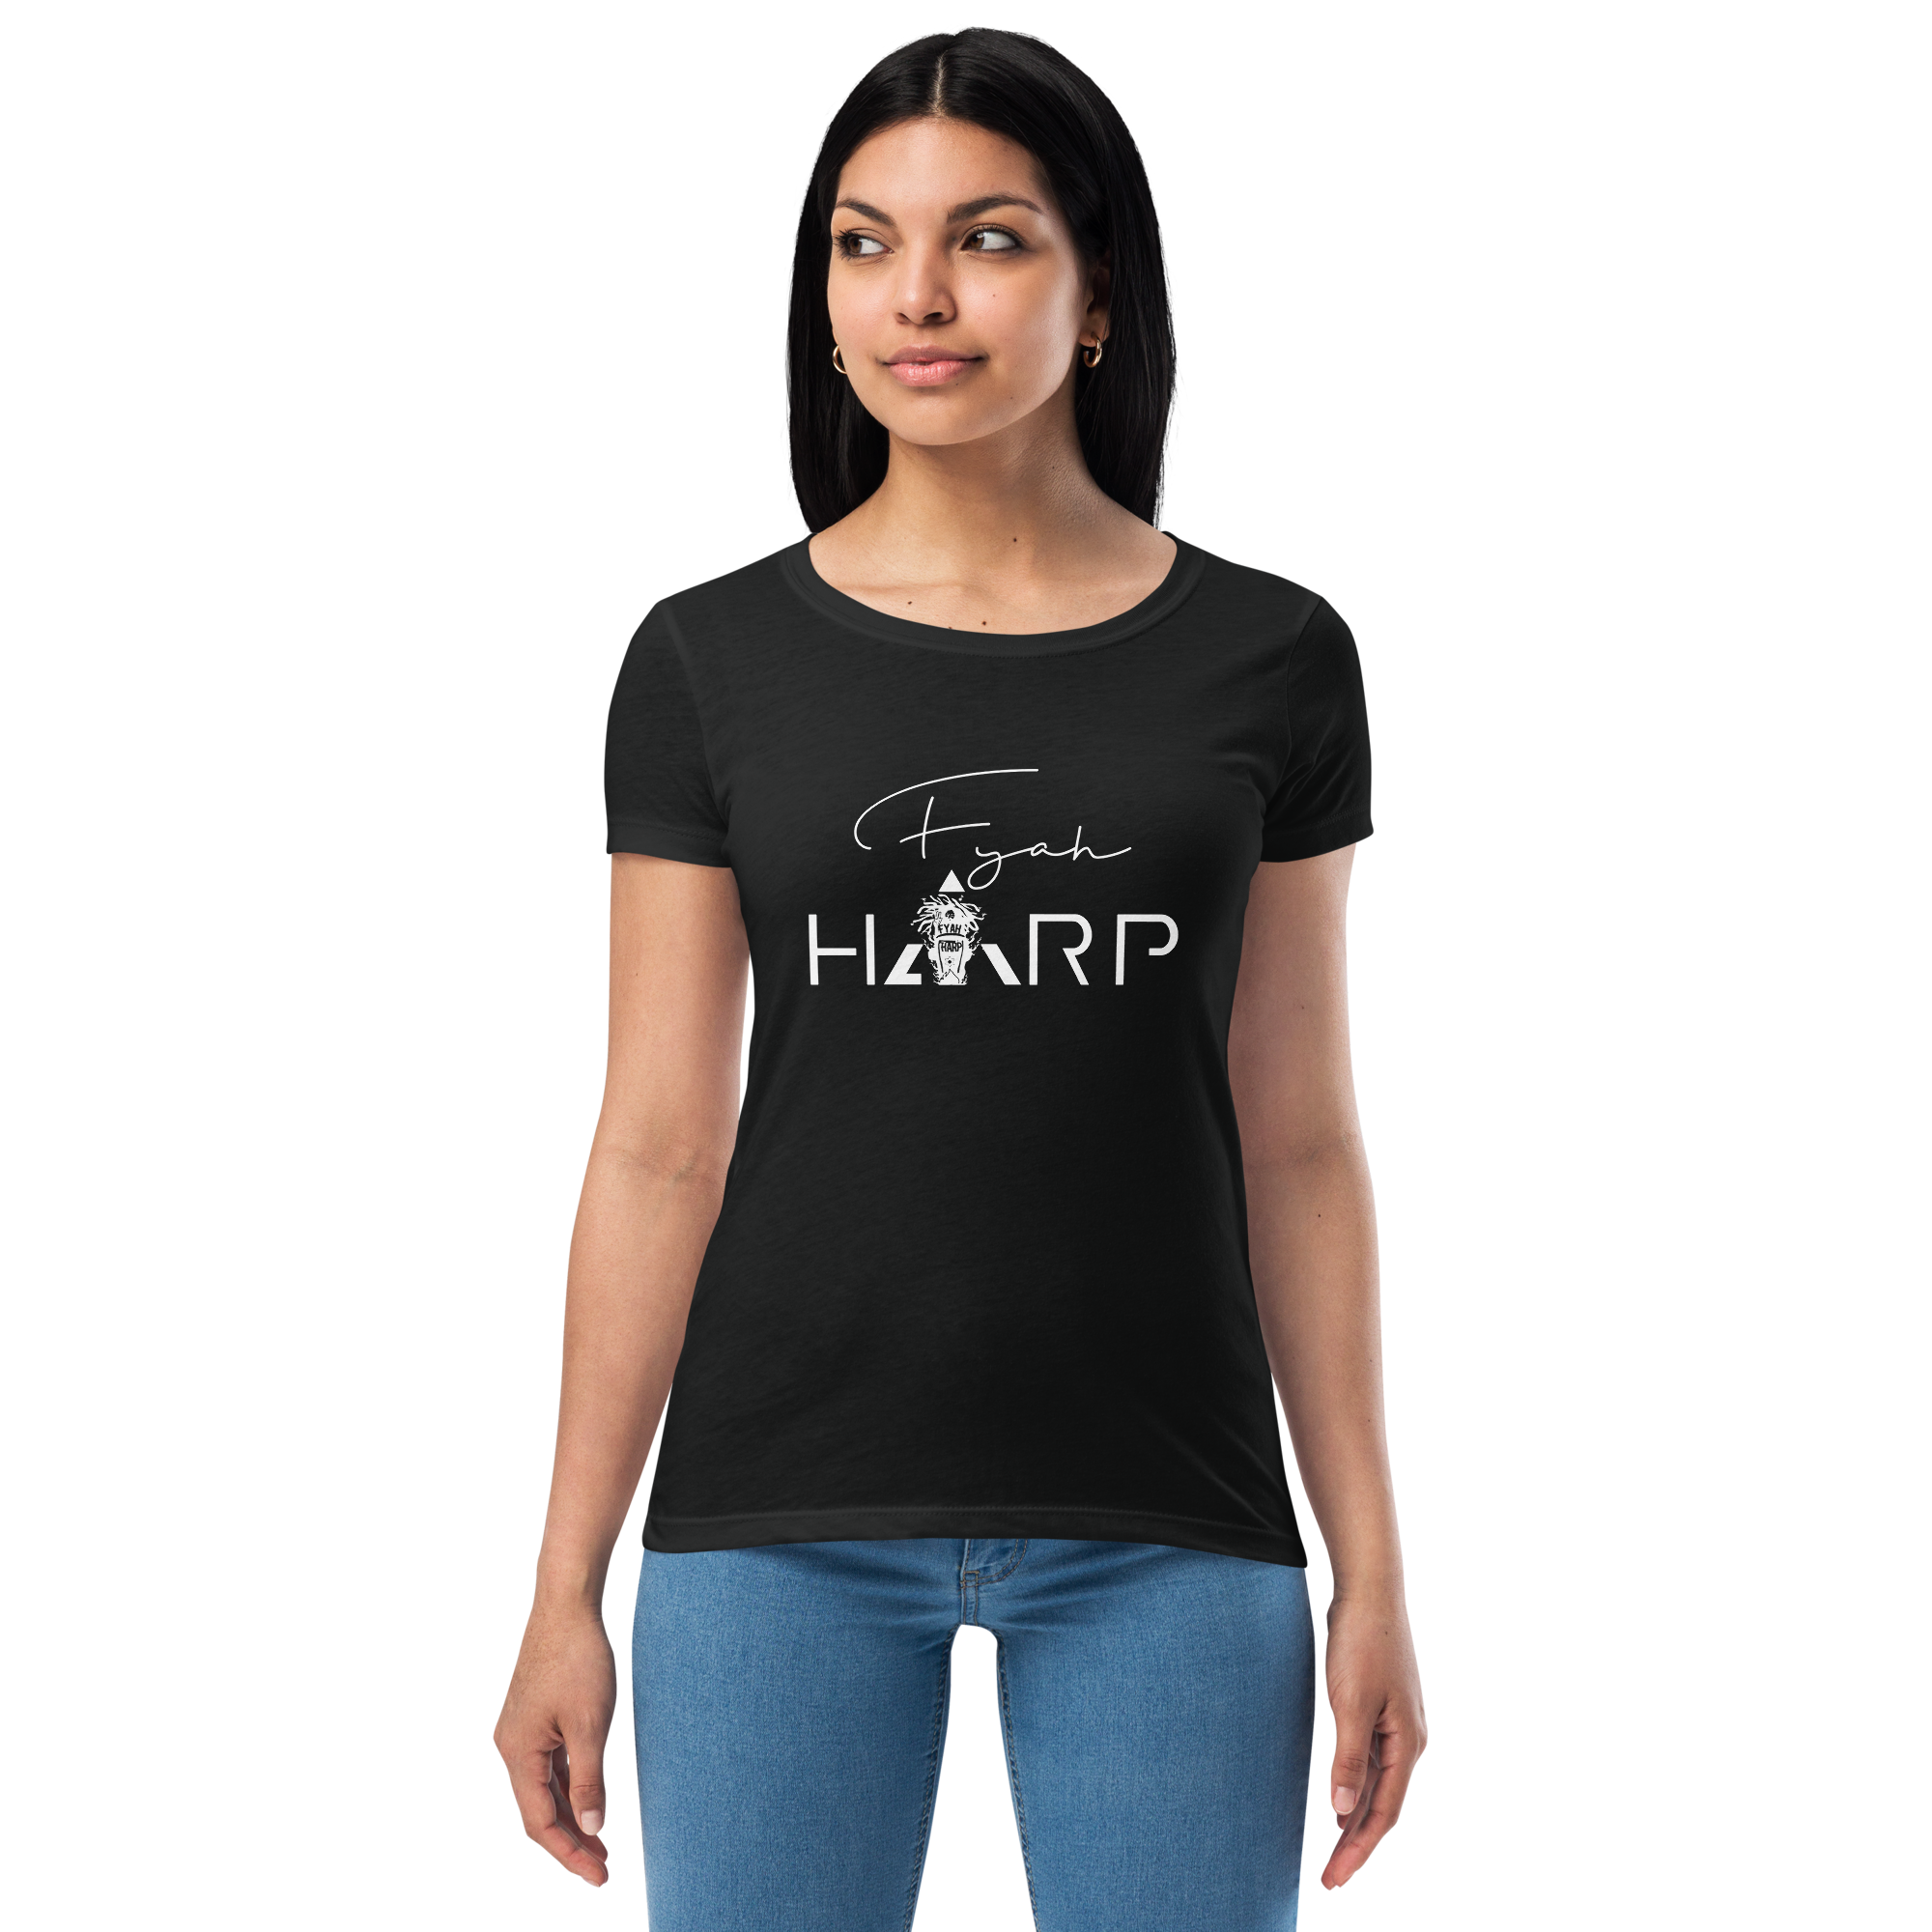 Fyah Harp logo Women's Fitted T-Shirt